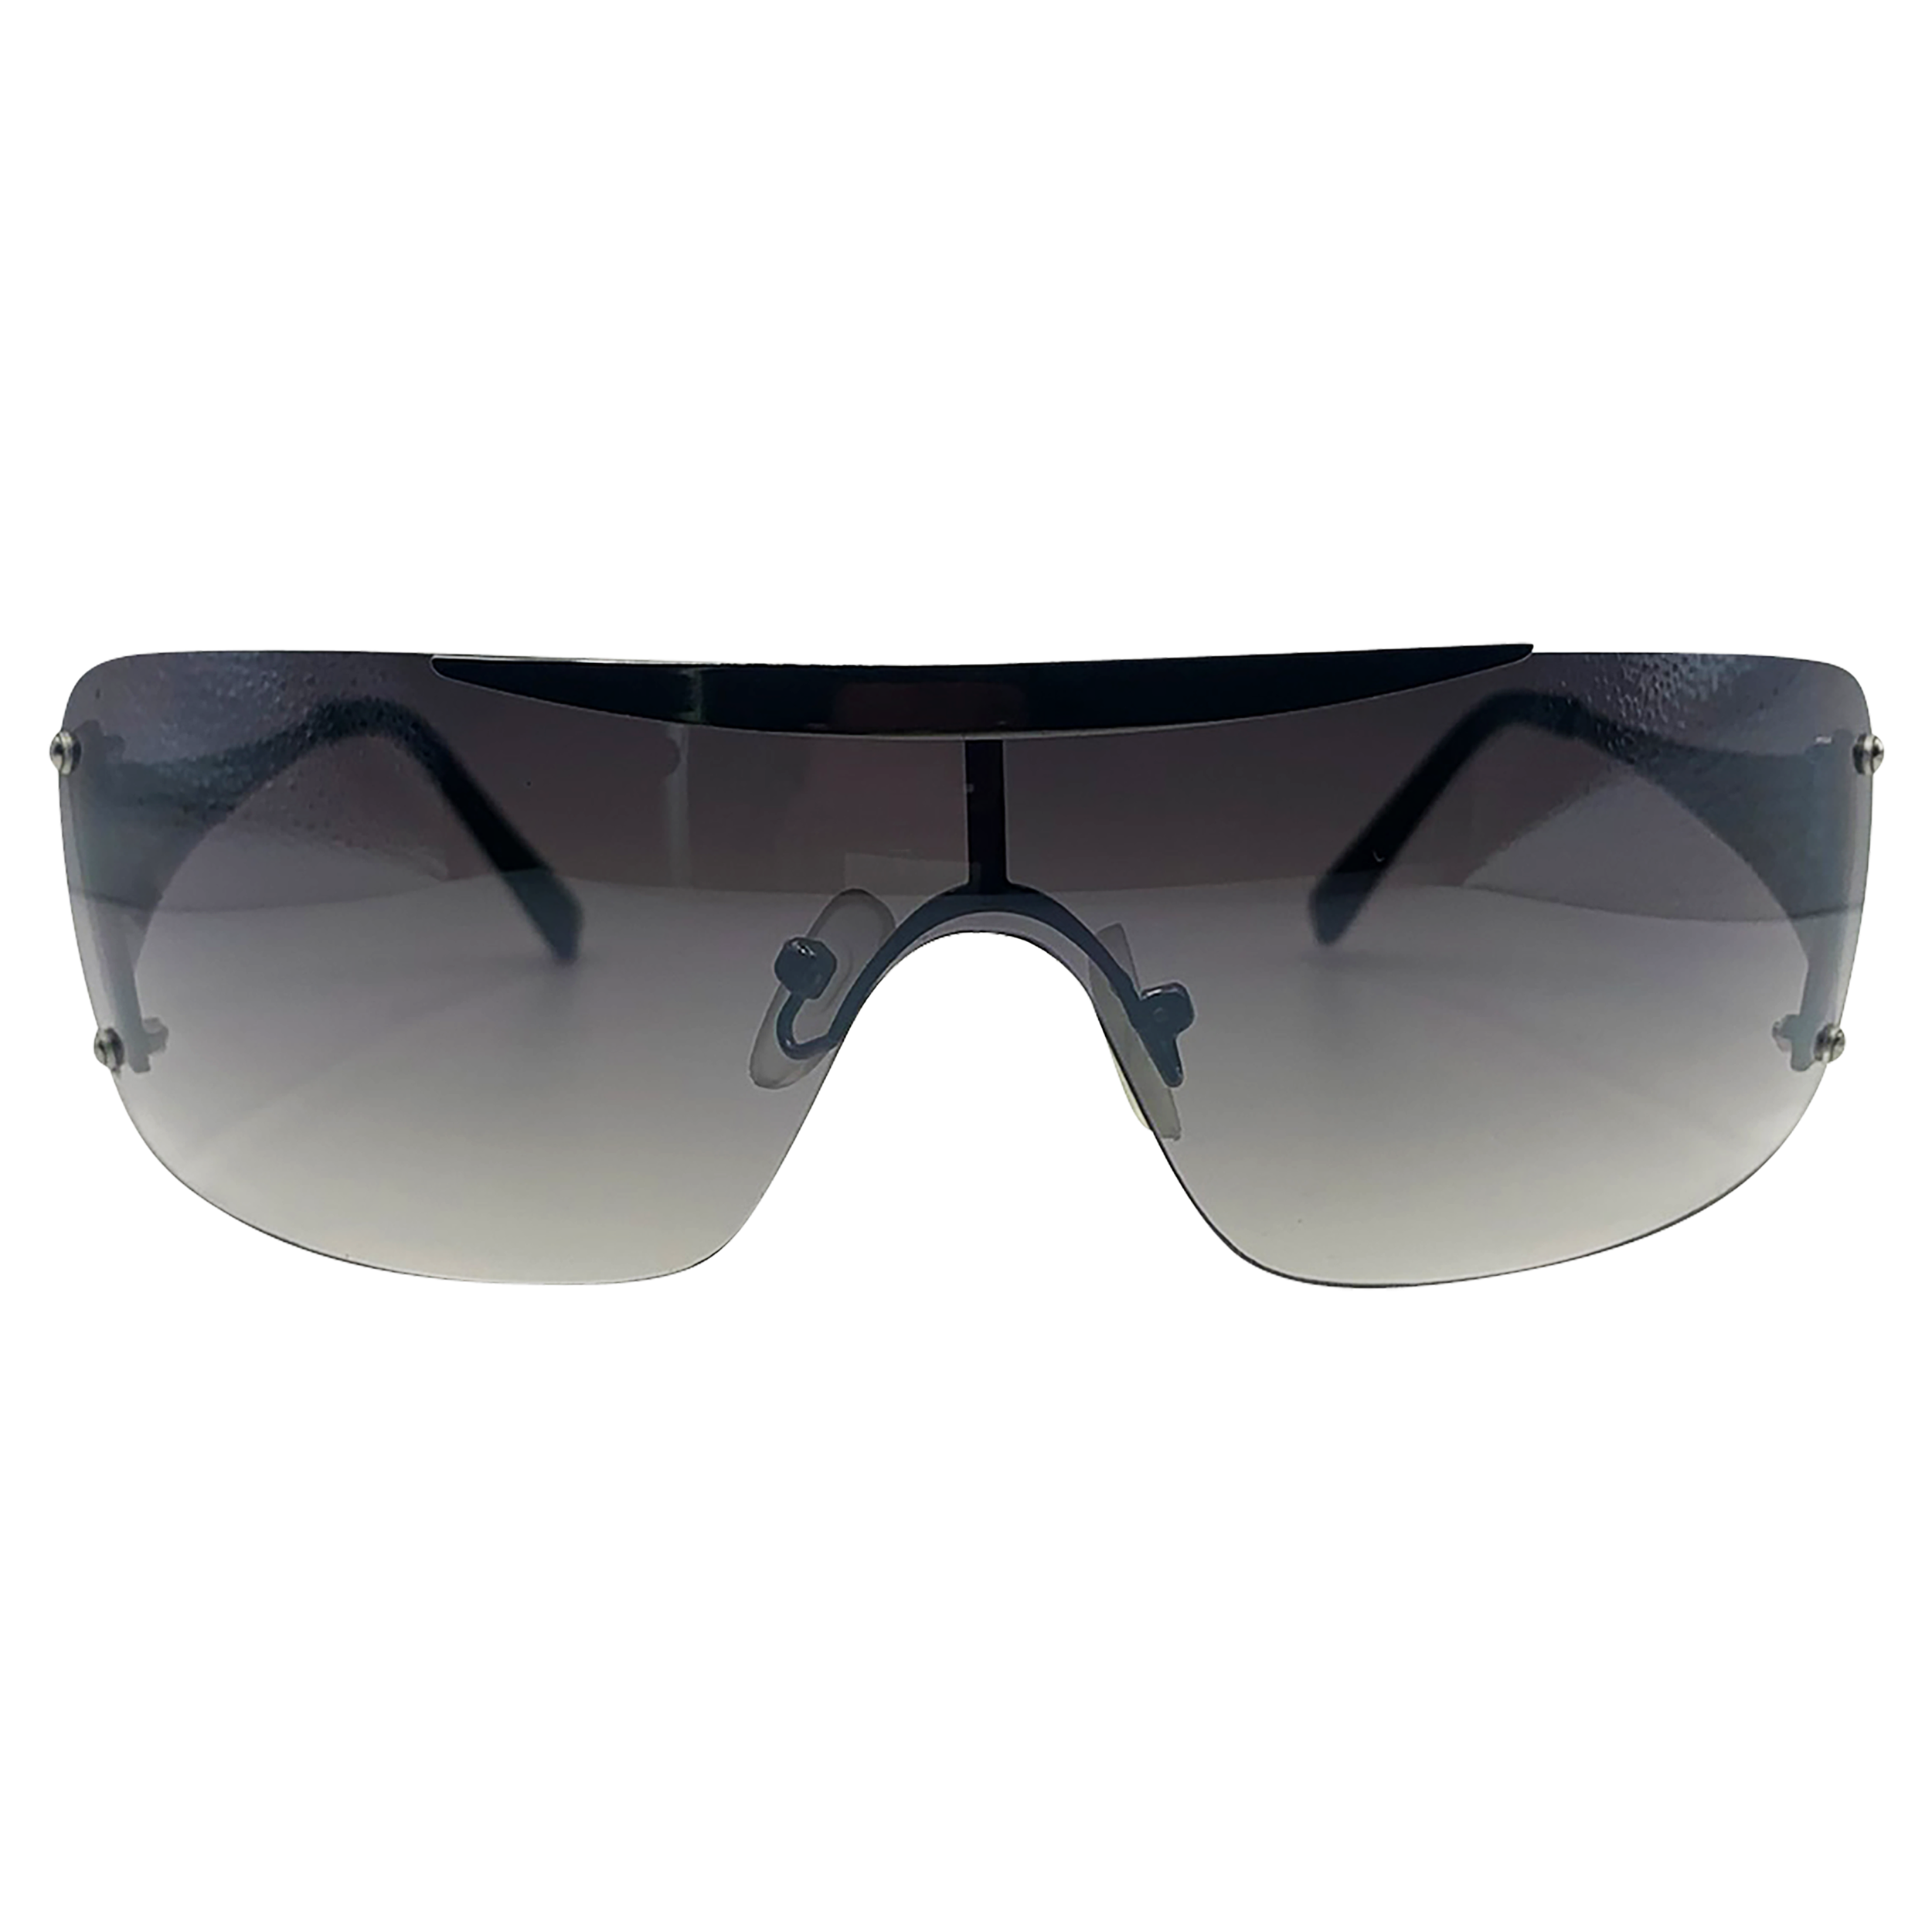 MIC DROP Shield Sunglasses